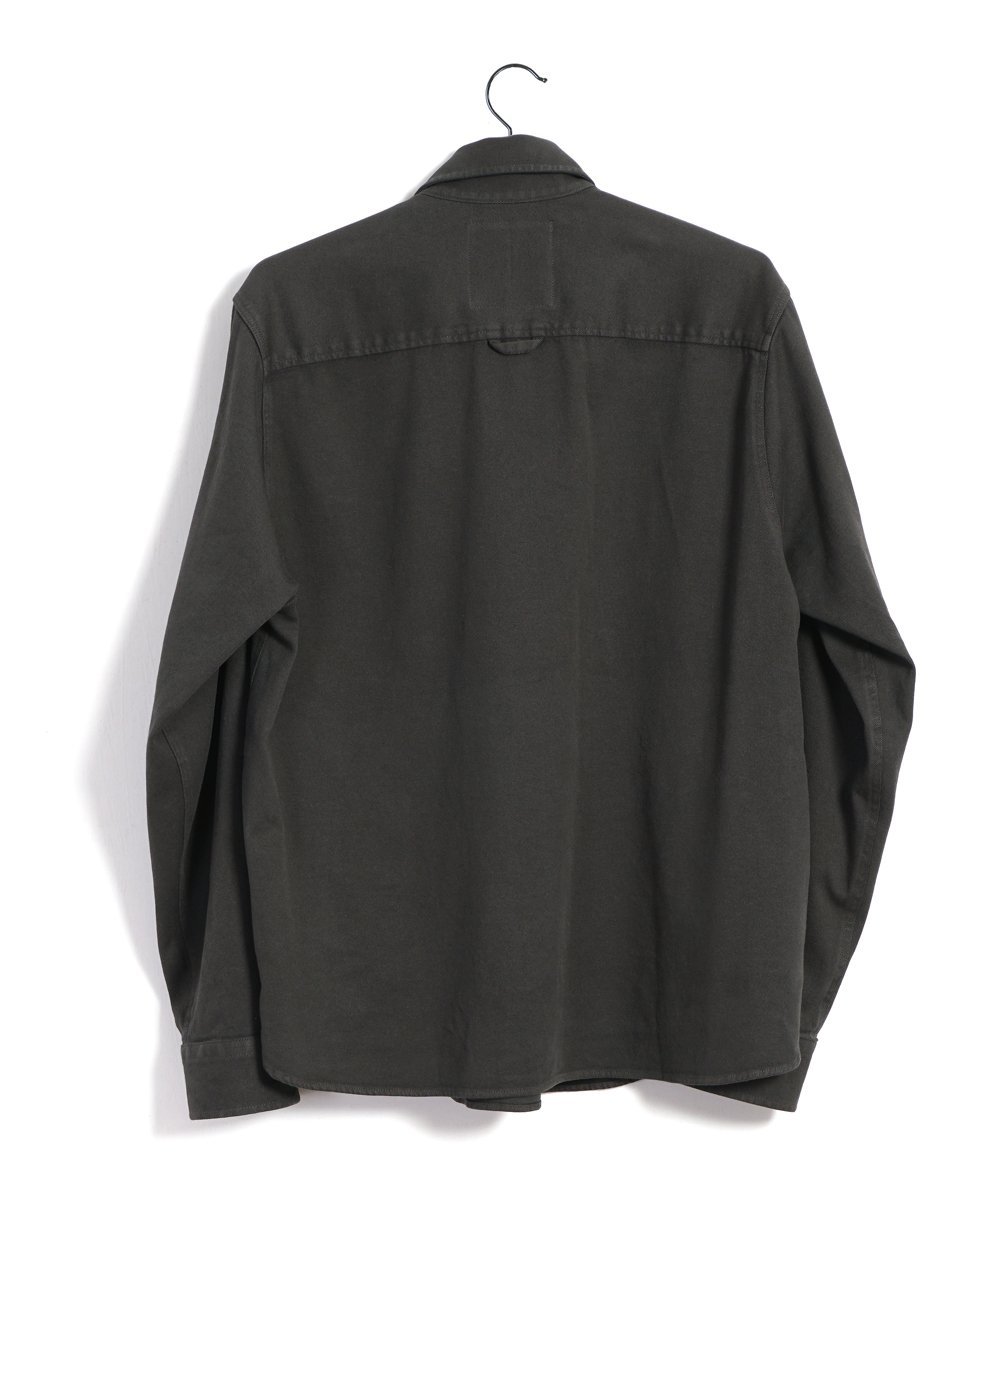 HANSEN Garments - ROBERT | Casual Pull-on Shirt | Dark Forest - HANSEN Garments